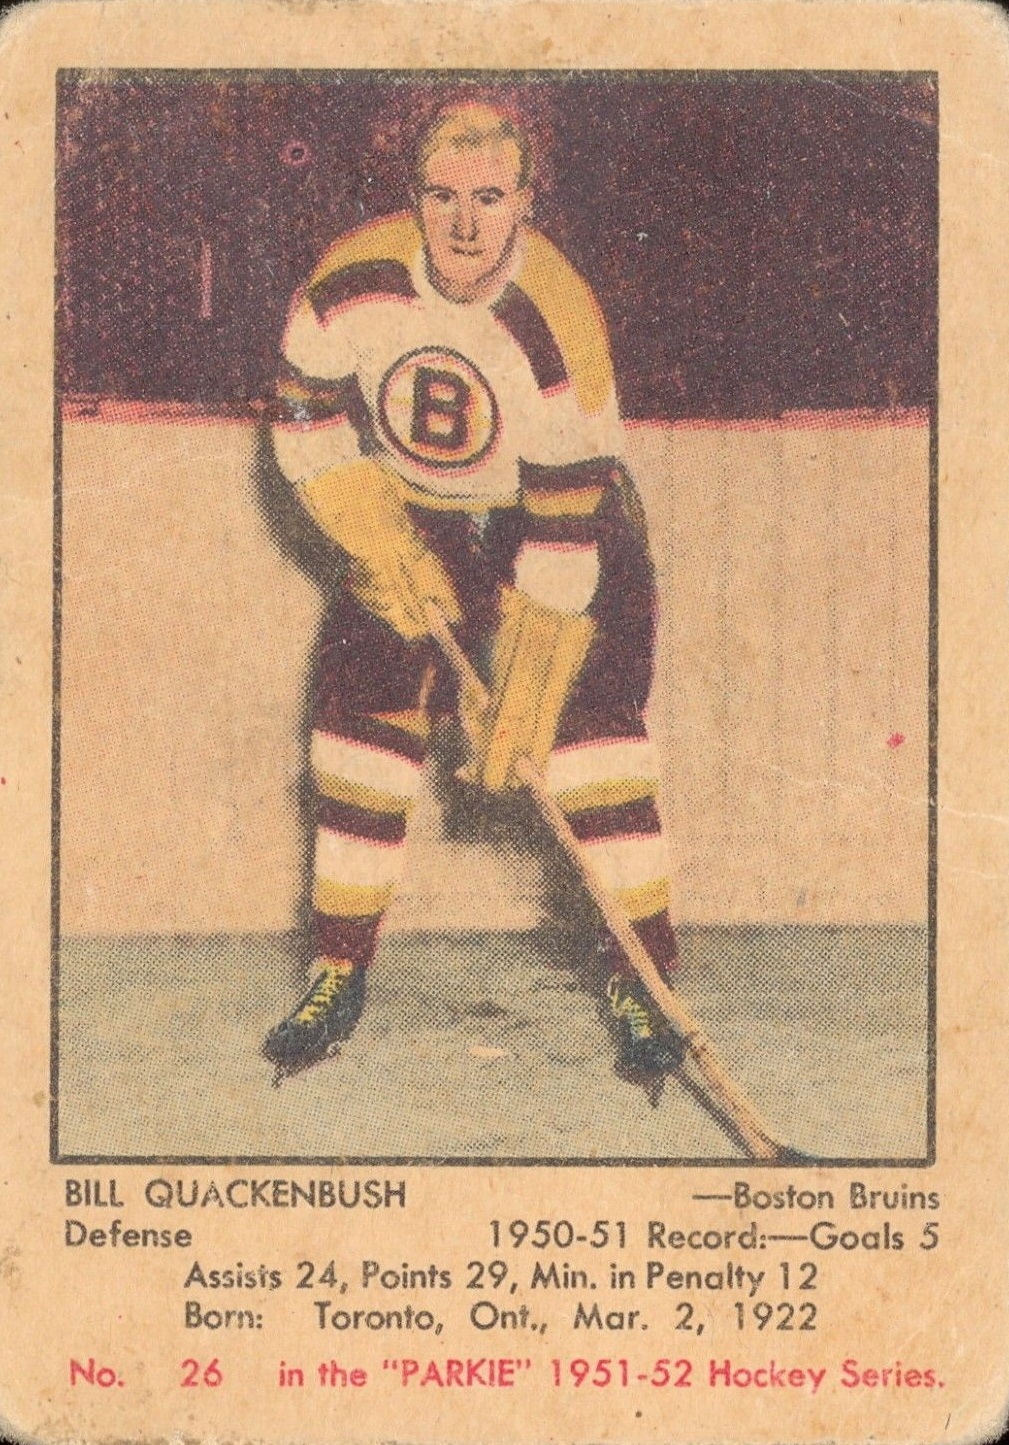  Bill Quackenbush player image